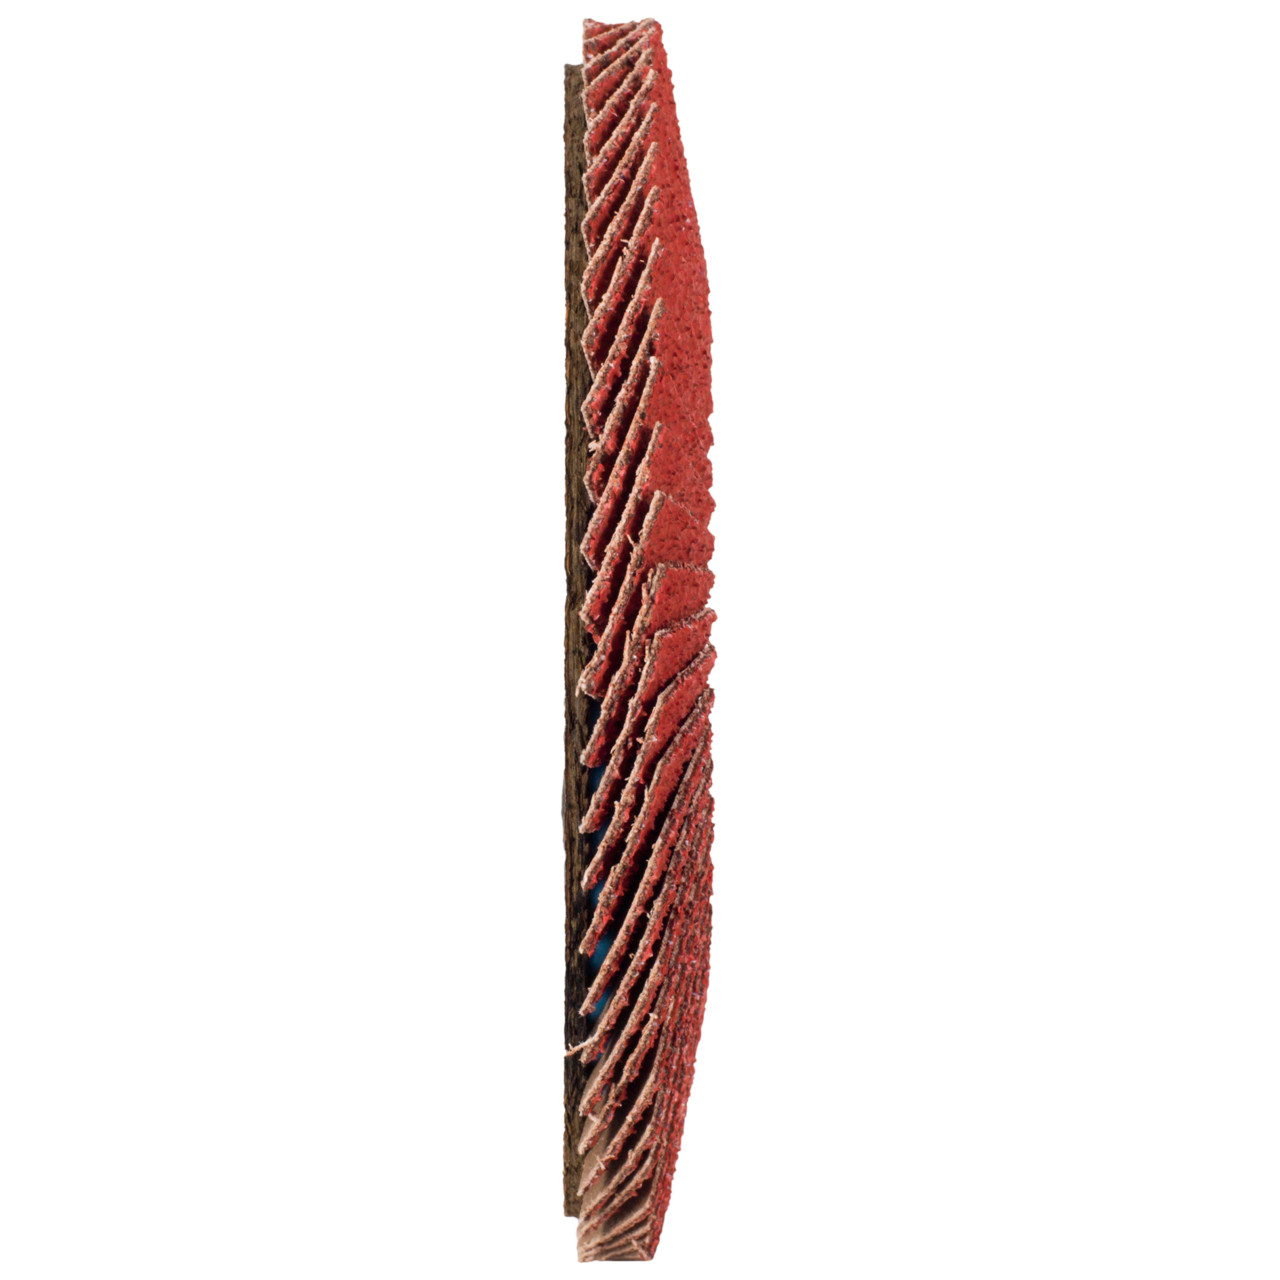 Tyrolit Gekartelde borgring DxH 178x22,23 CERABOND gekartelde borgring voor roestvrij staal, P80, vorm: 27A - slingerontwerp (glasvezeldragerhuisontwerp), Art. 34166168